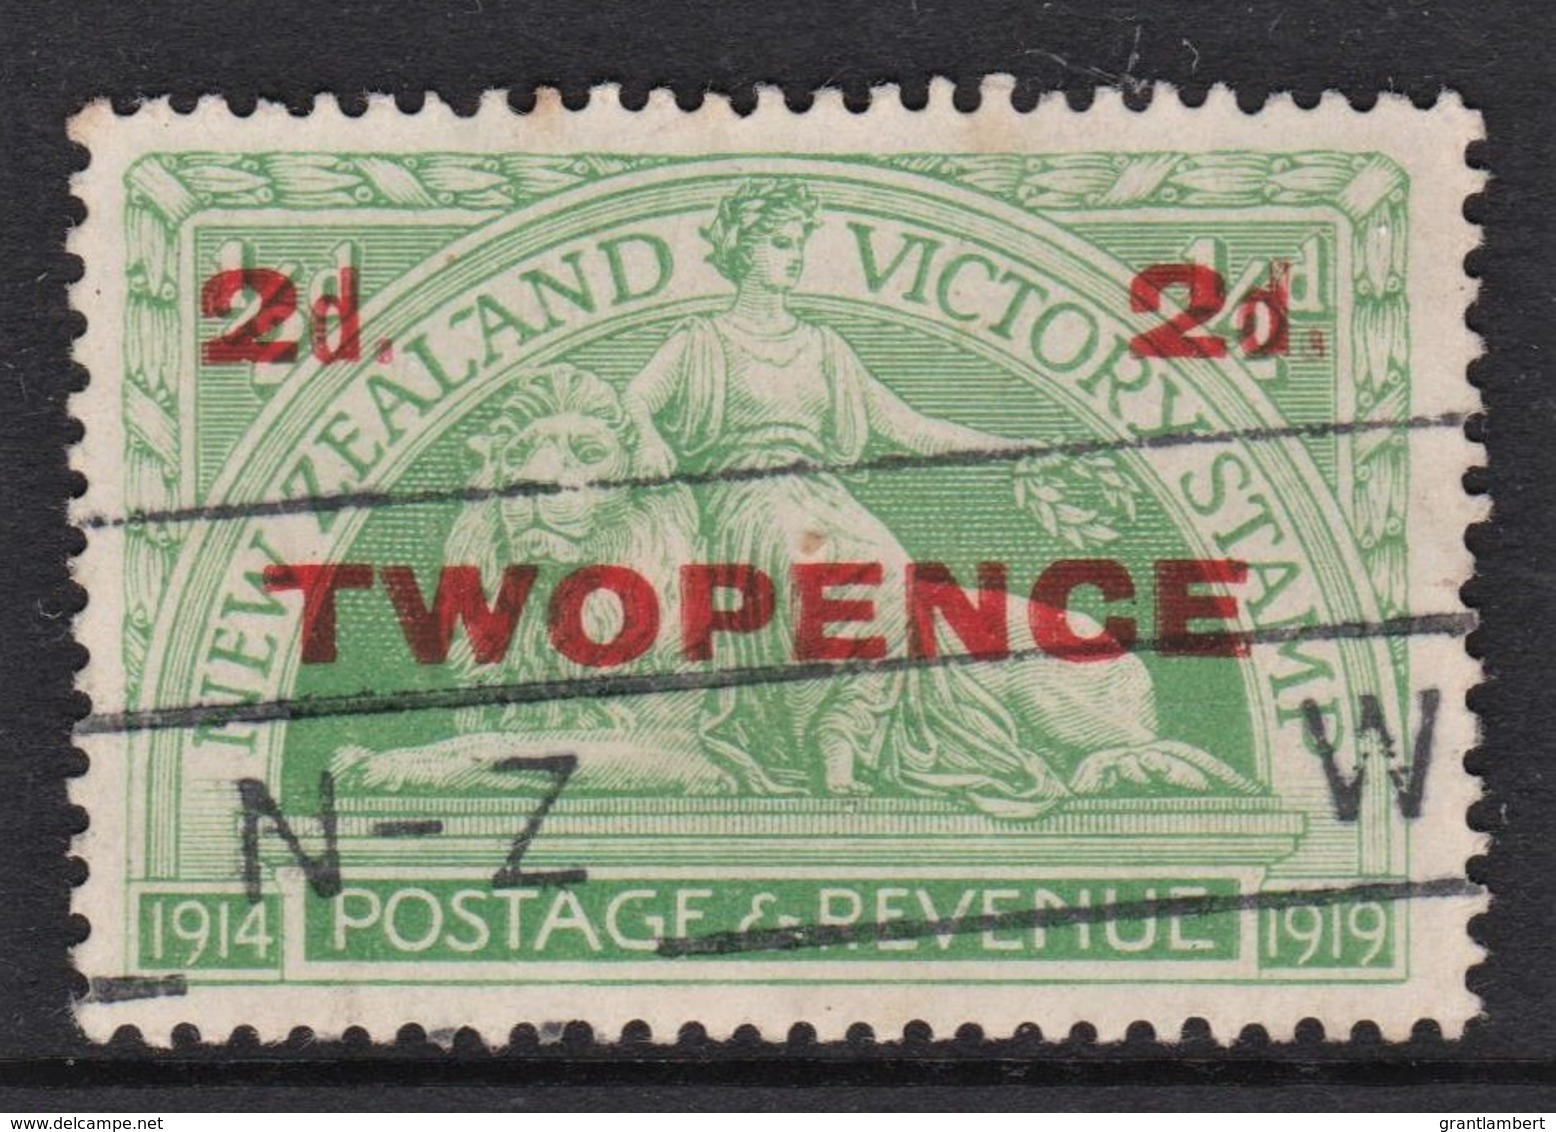 New Zealand 1922 Victory TWO PENCE Overprint Used  SG 459 - Gebruikt